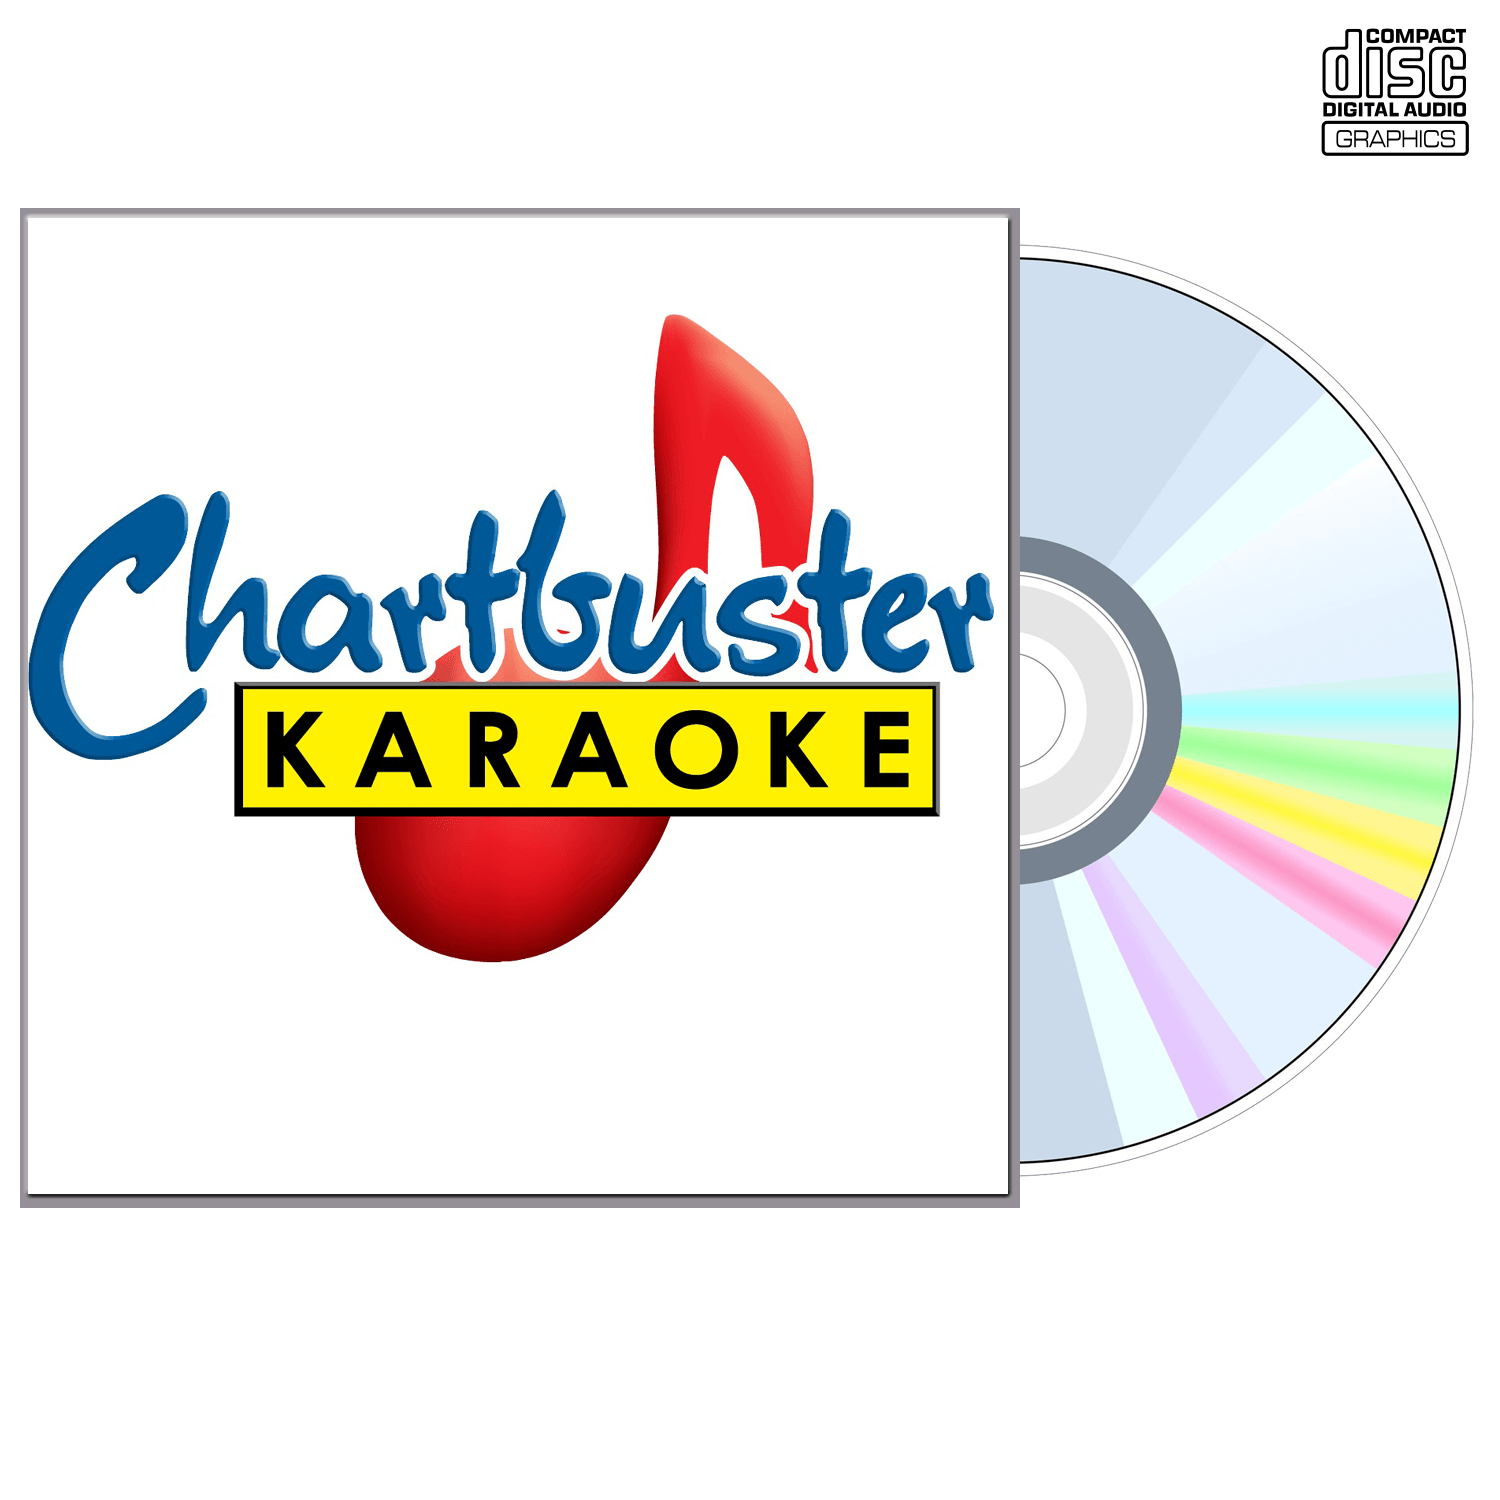 Allman Brothers - CD+G - Chartbuster Karaoke - Karaoke Home Entertainment